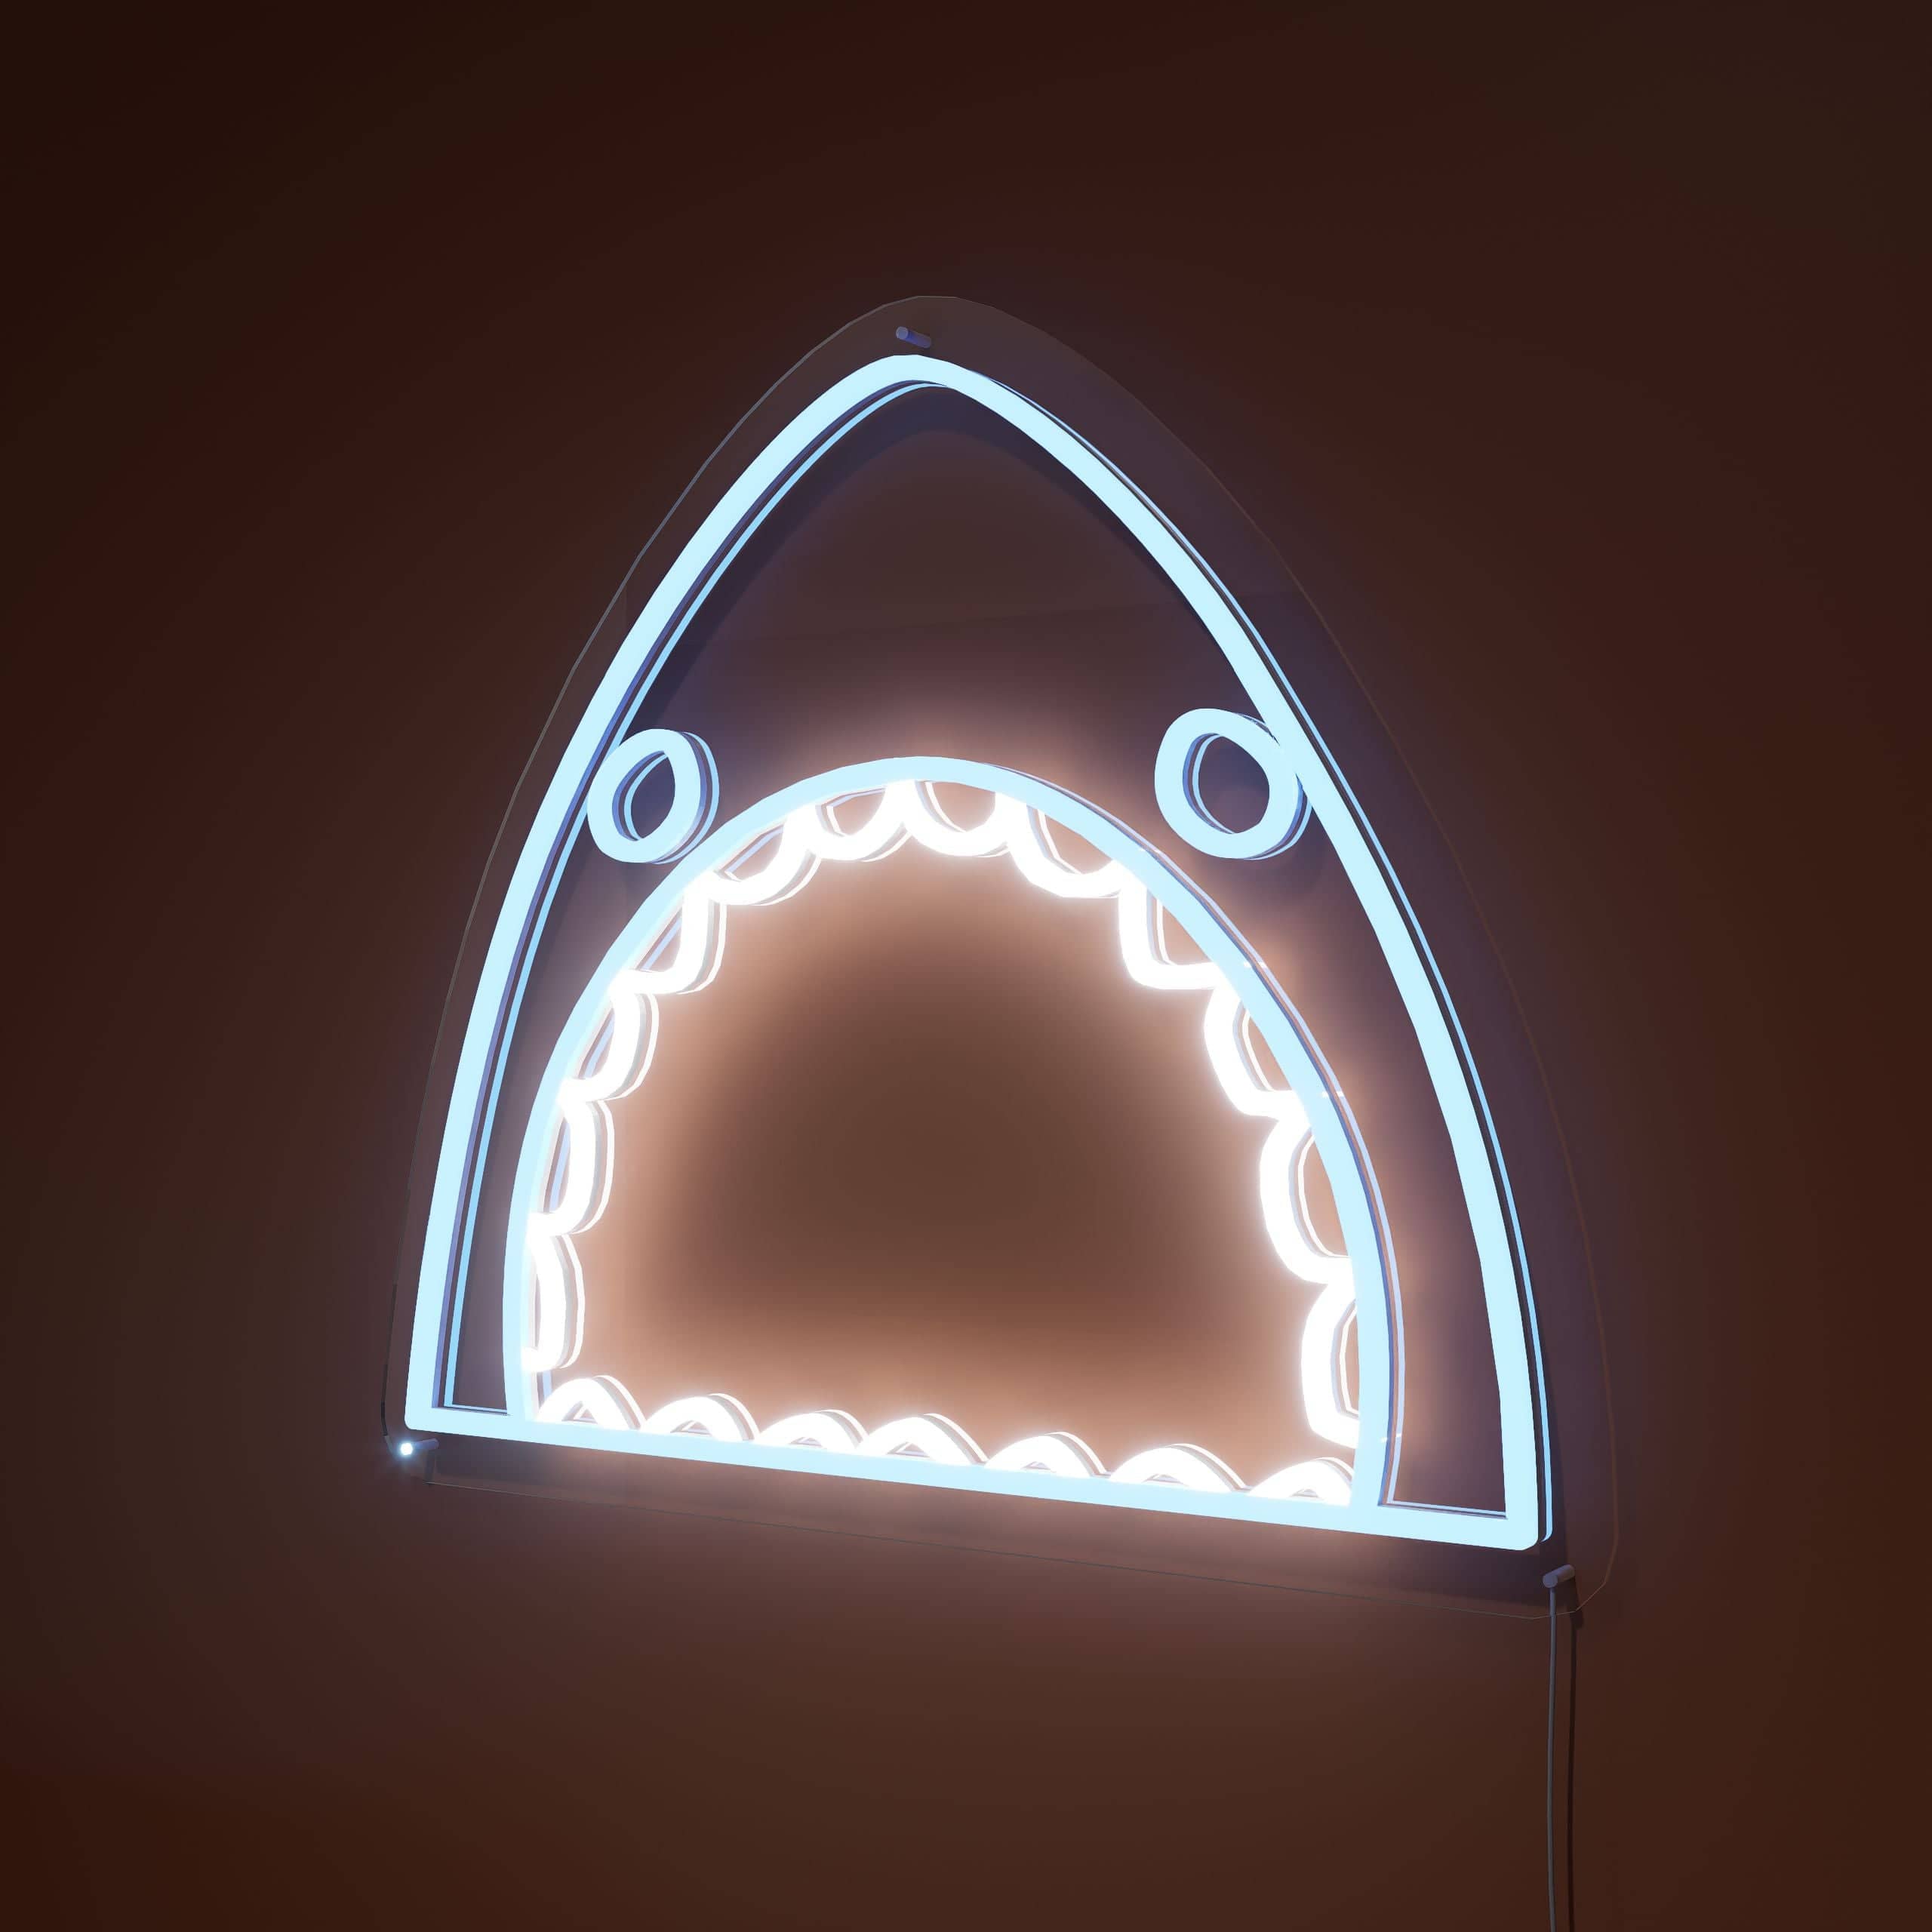 enormous-shark's-maw-neon-sign-lite